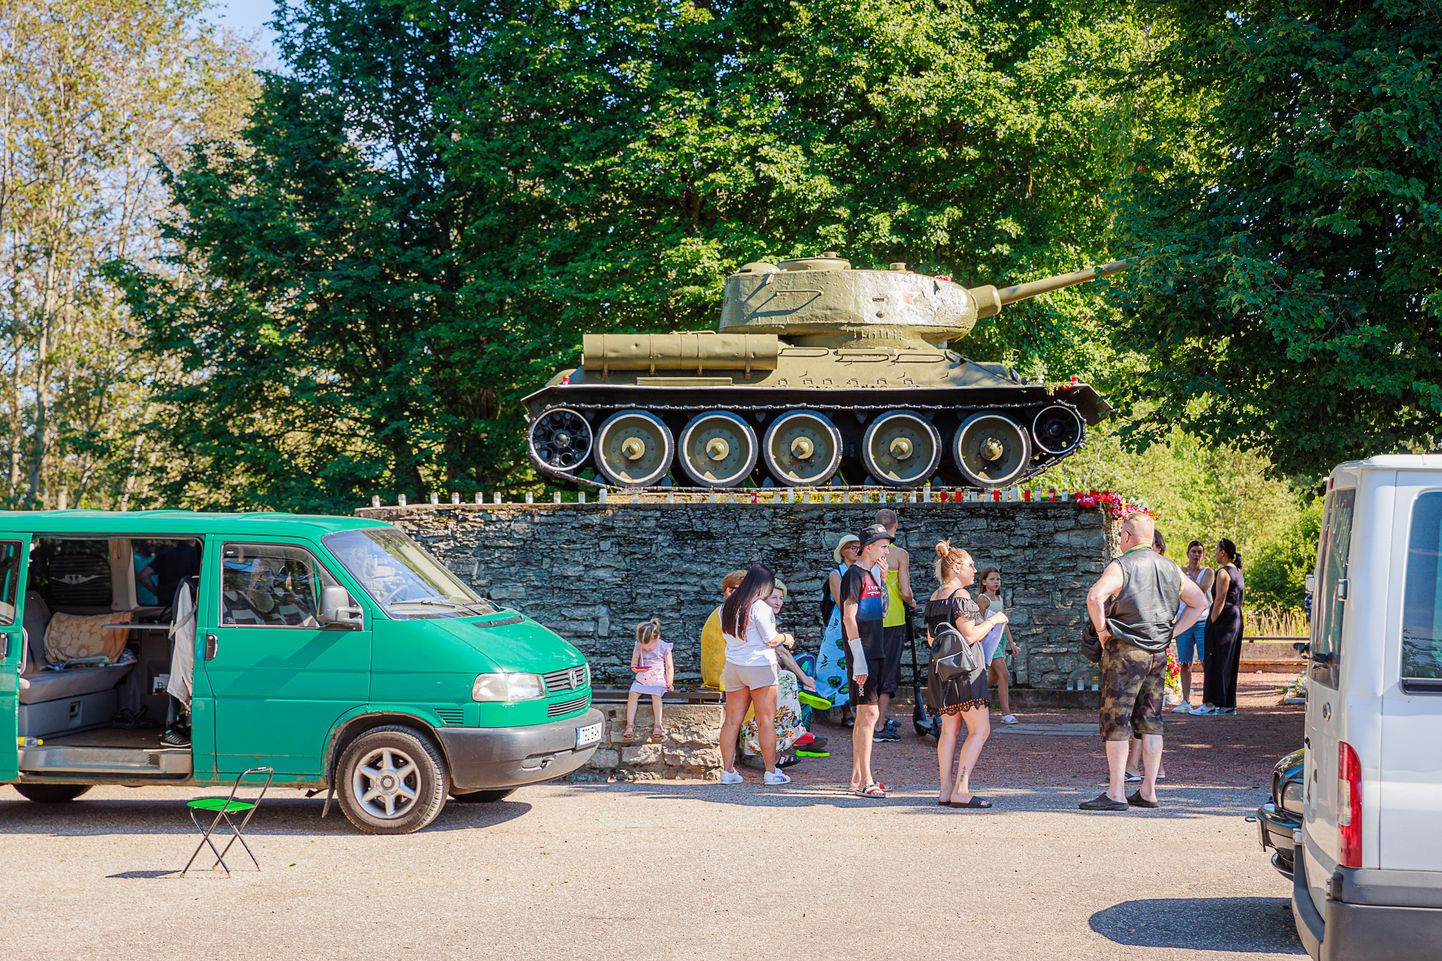 Защитники у "красного" танка в пятницу, 5 августа.